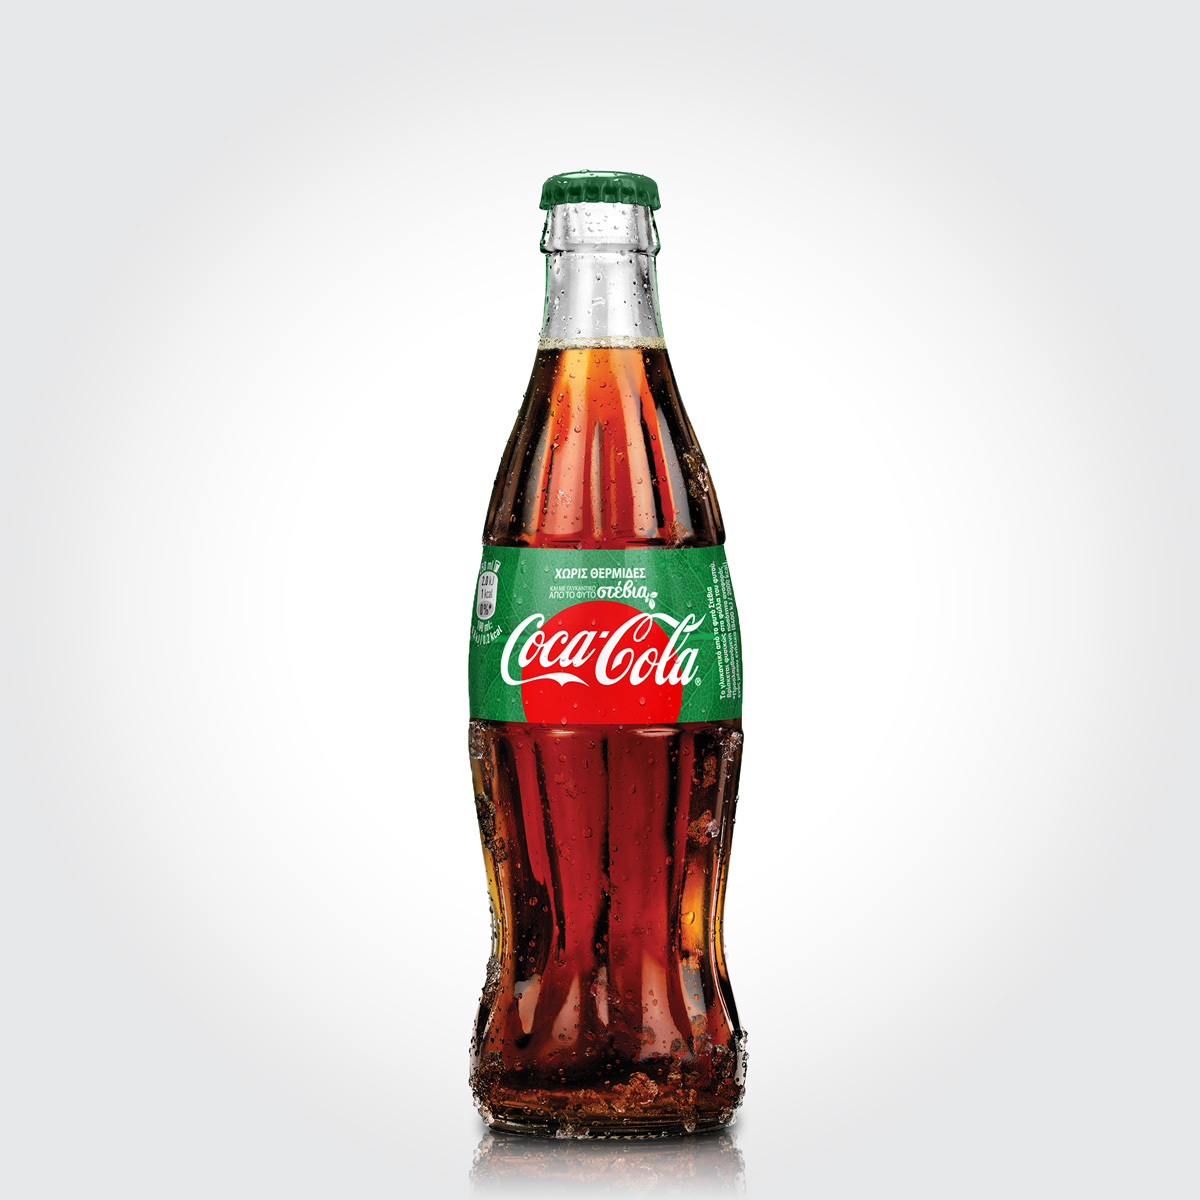 Coca-Cola Stevia redesign 250ml glass bottle